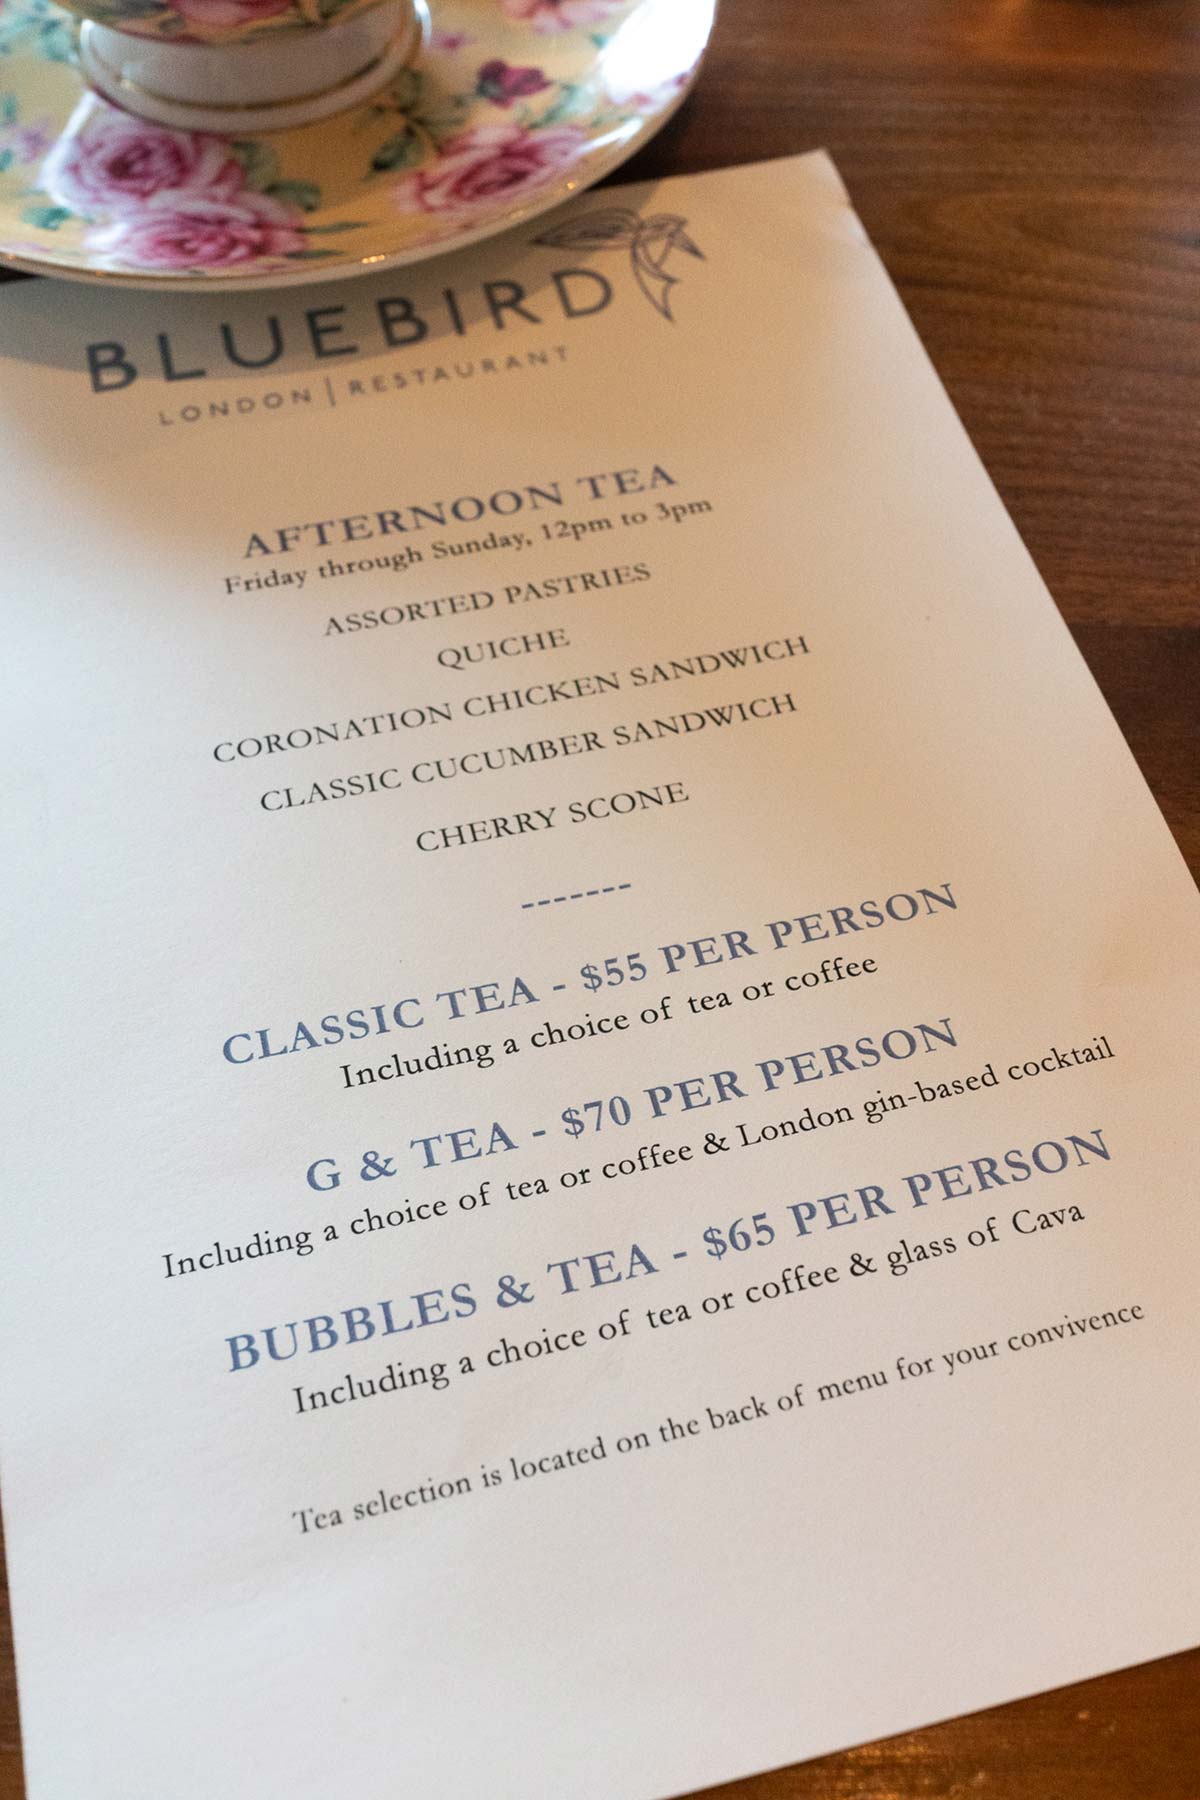 Bluebird London NYC afternoon tea menu.